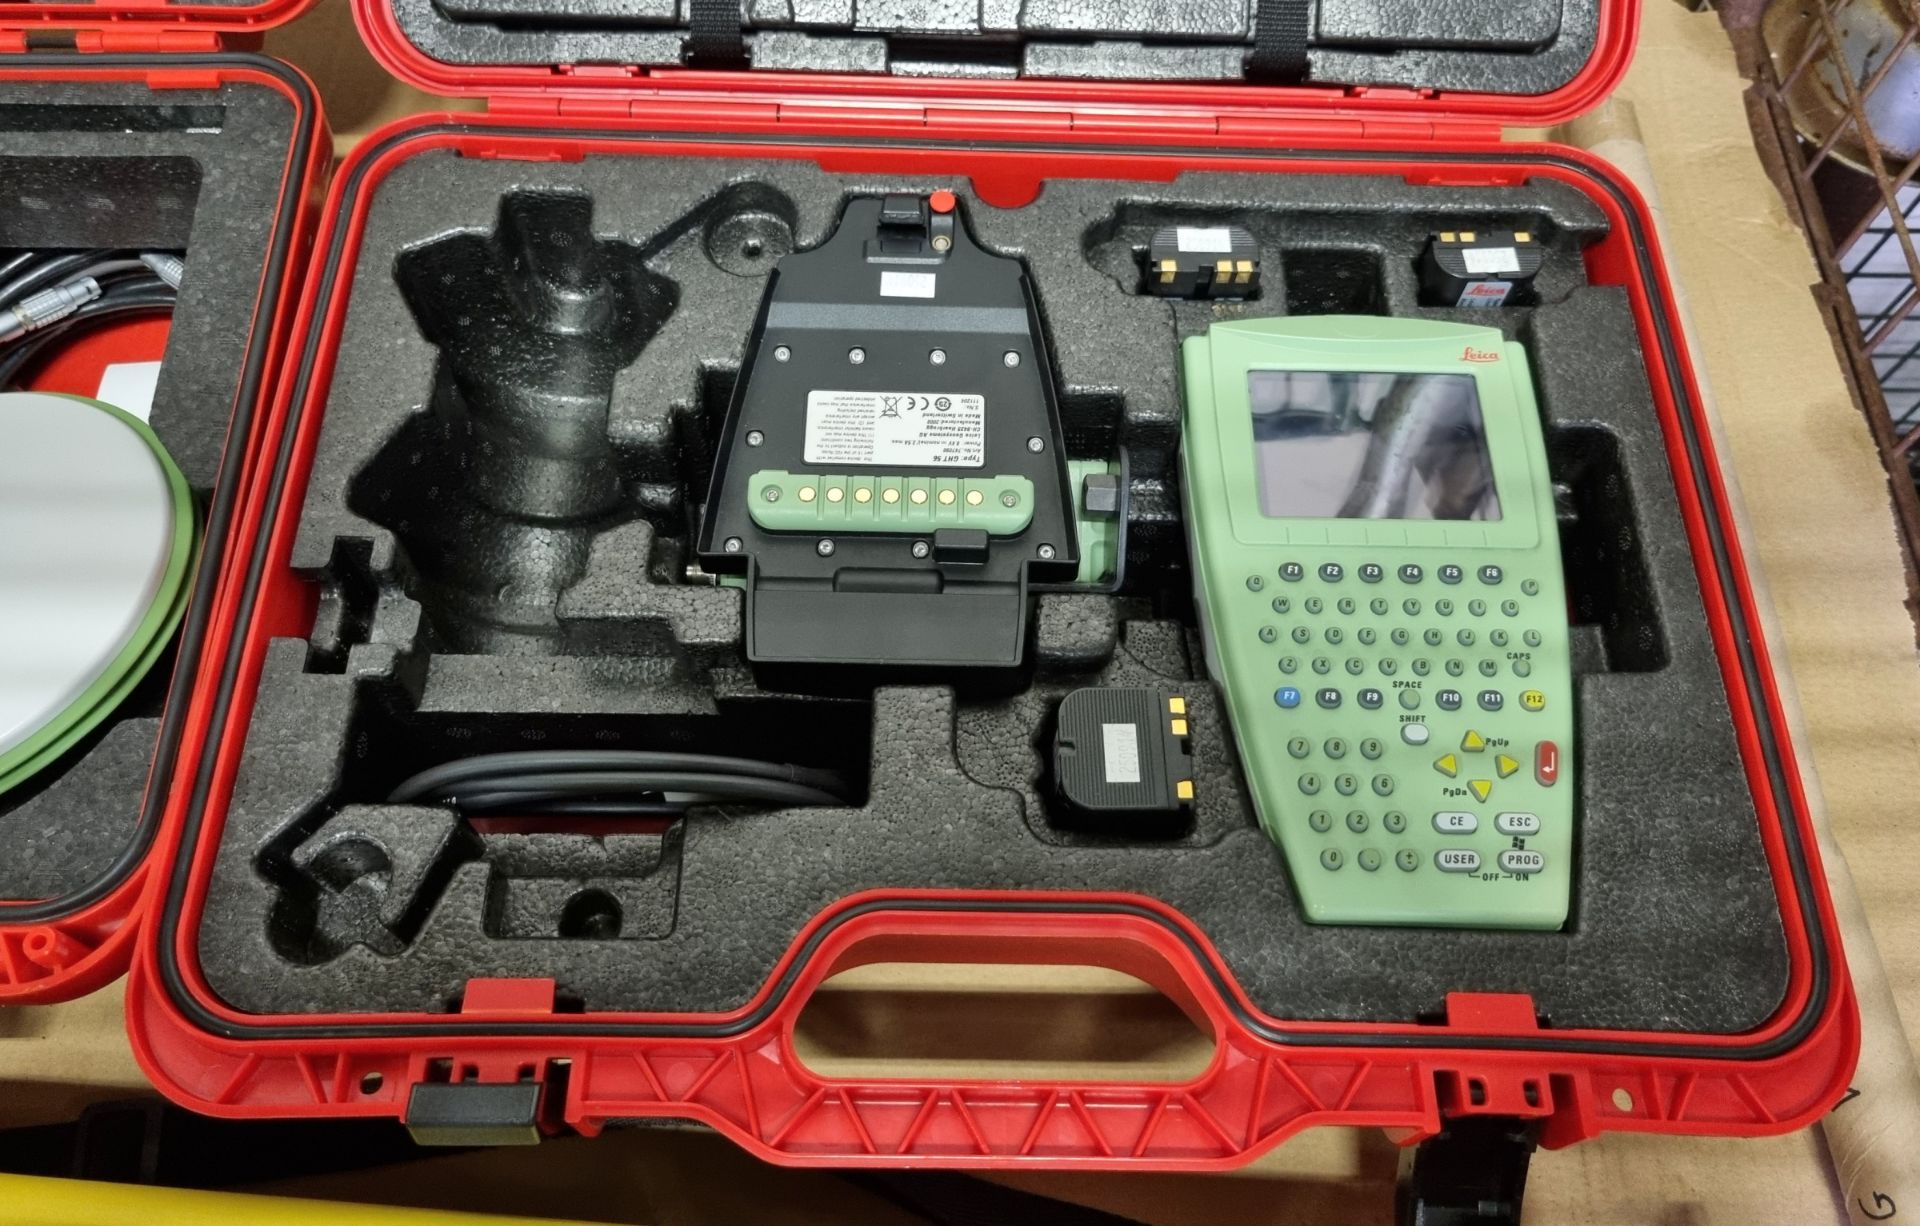 Leica System surveying kit - see description for details - Image 5 of 11